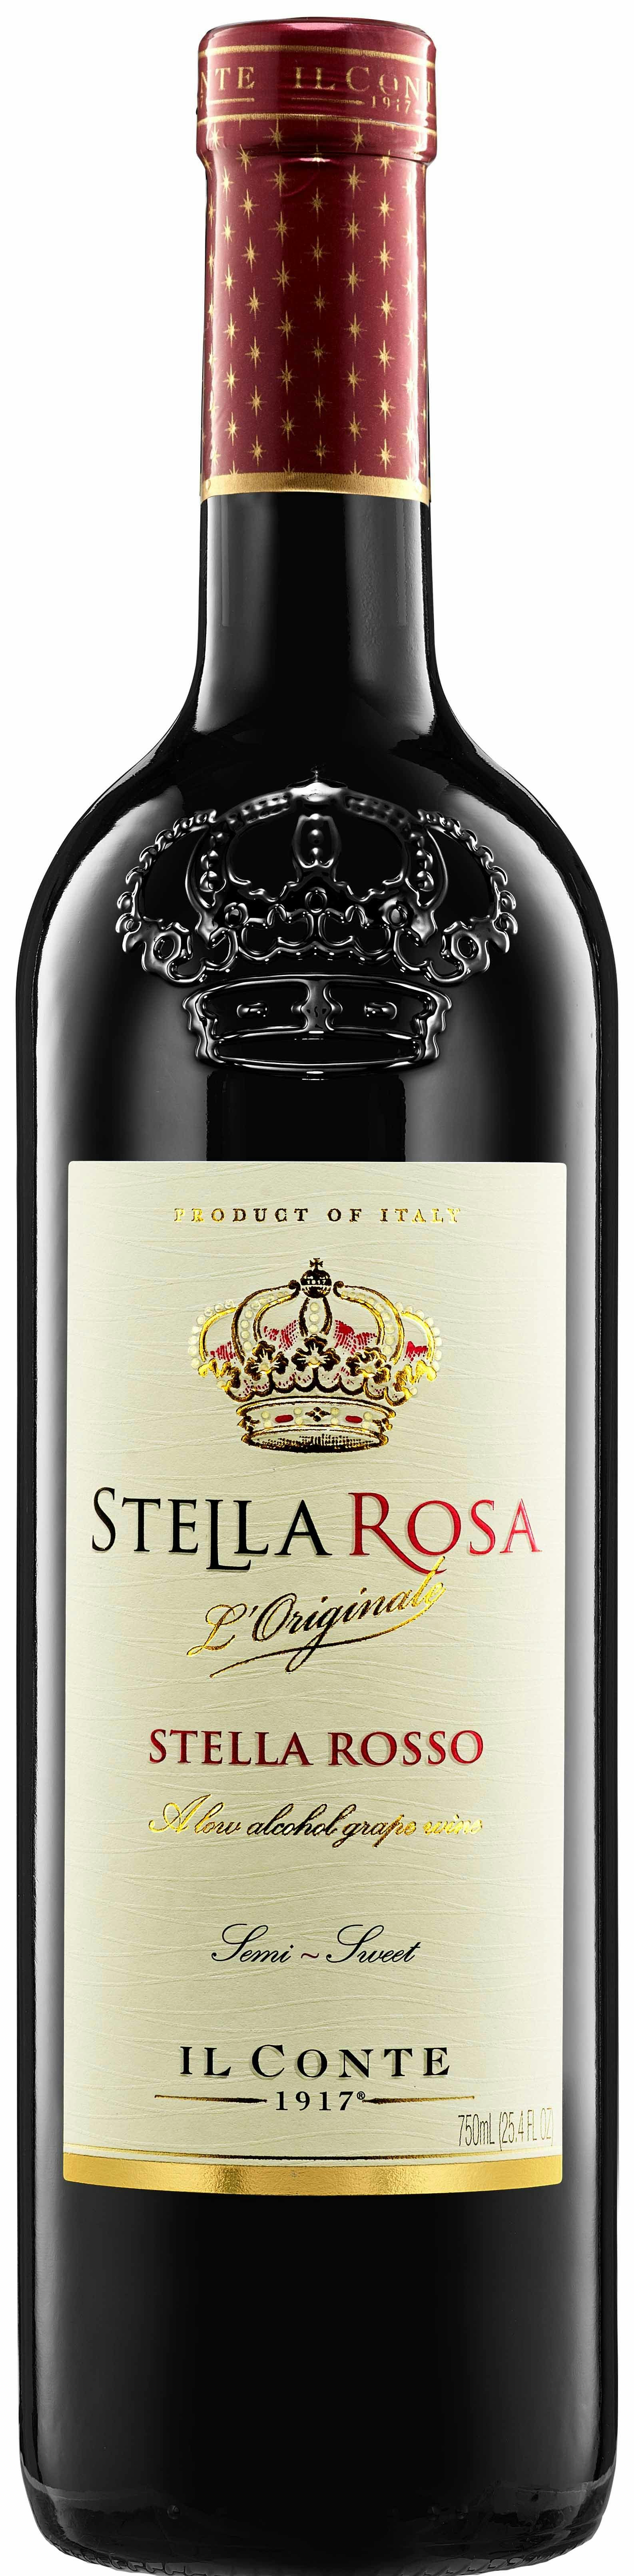 stella rosa red wine